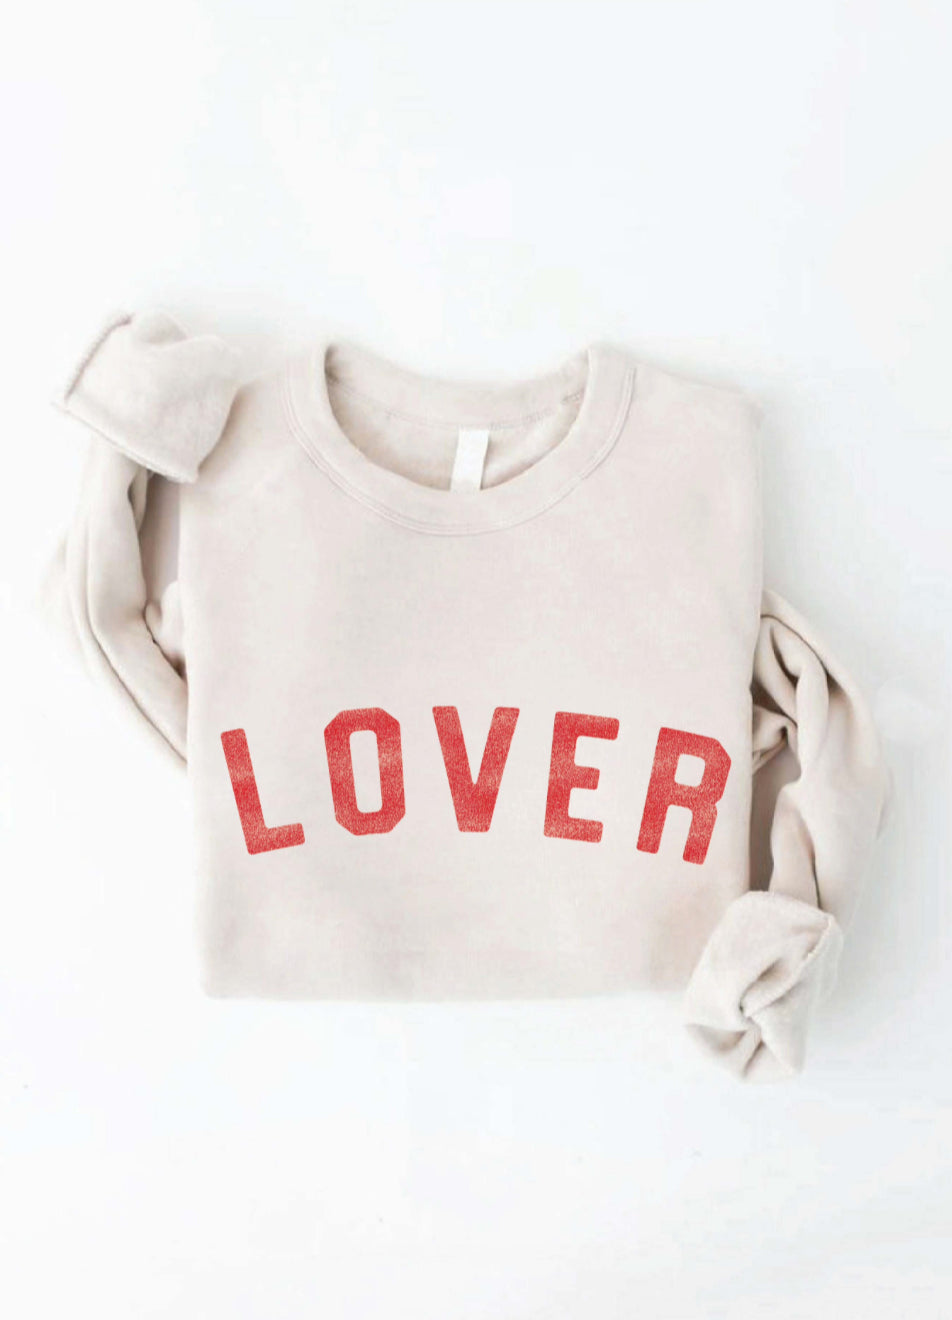 LOVER Cloud Spun Sweatshirt, Two Colors - Jade Creek Boutique